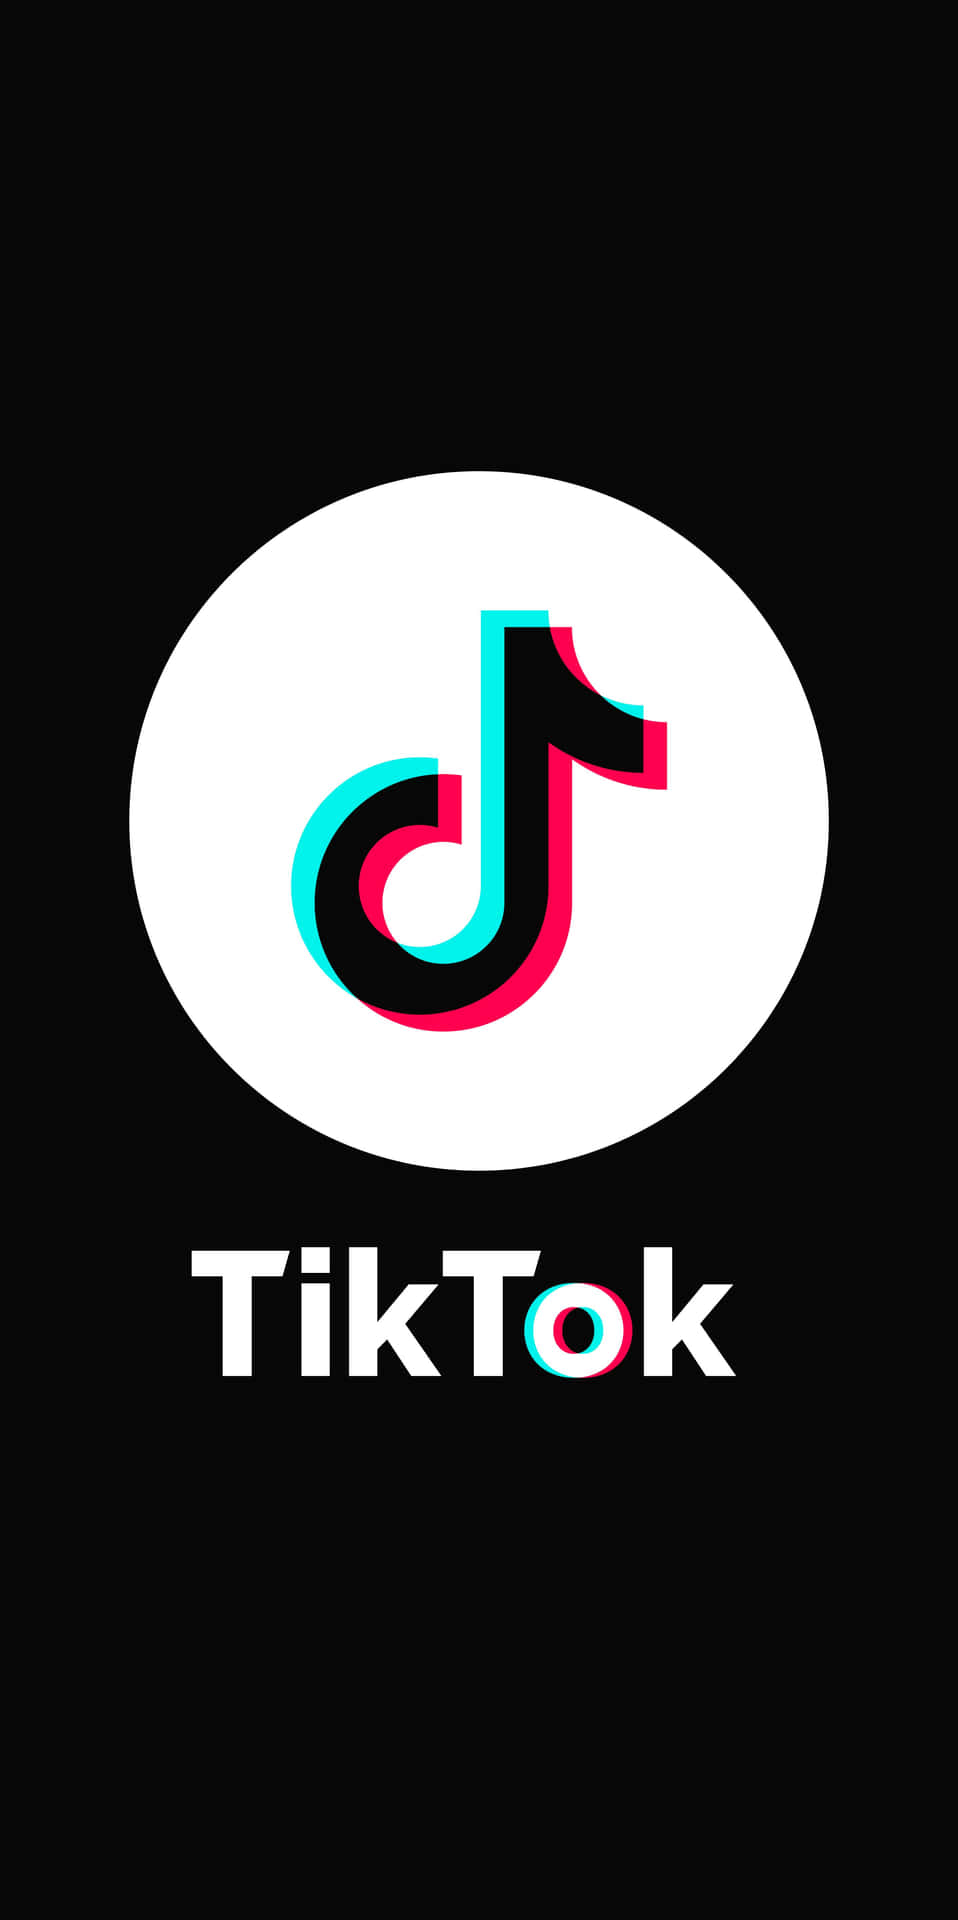 Download TikTok Logo Wallpaper | Wallpapers.com